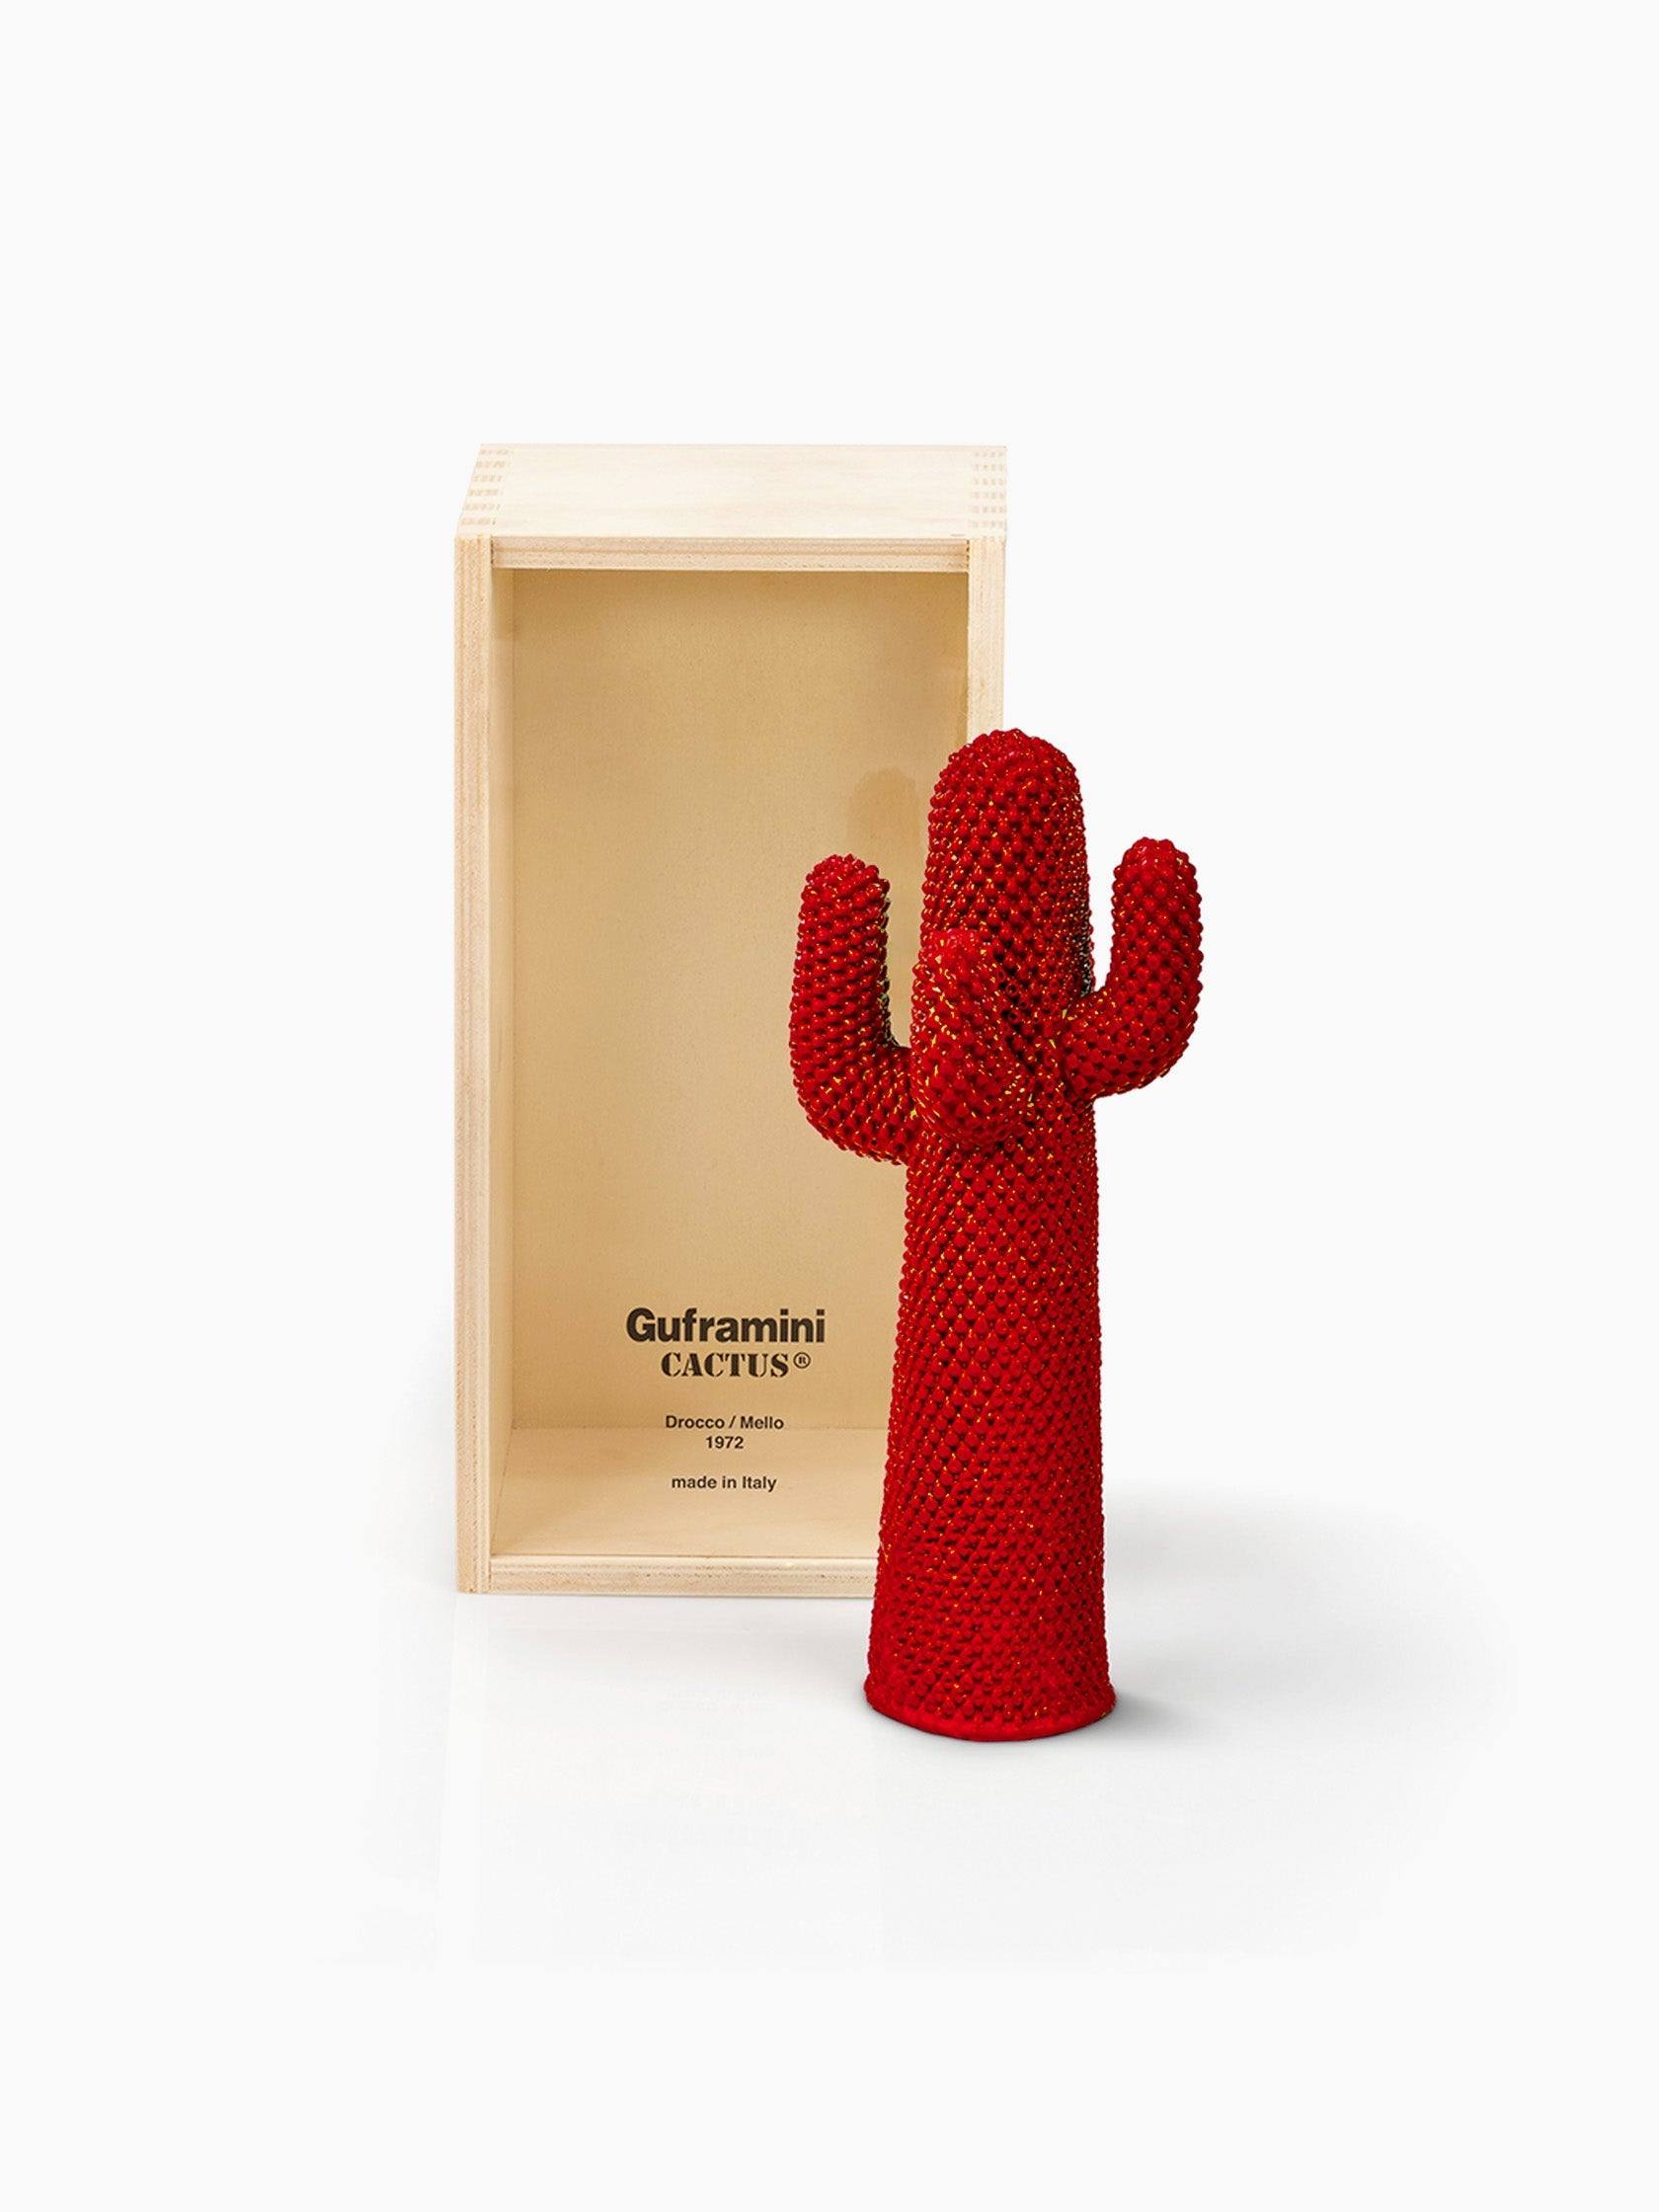 Guframini Cactus Red by Gufram - Mankovsky Gallery